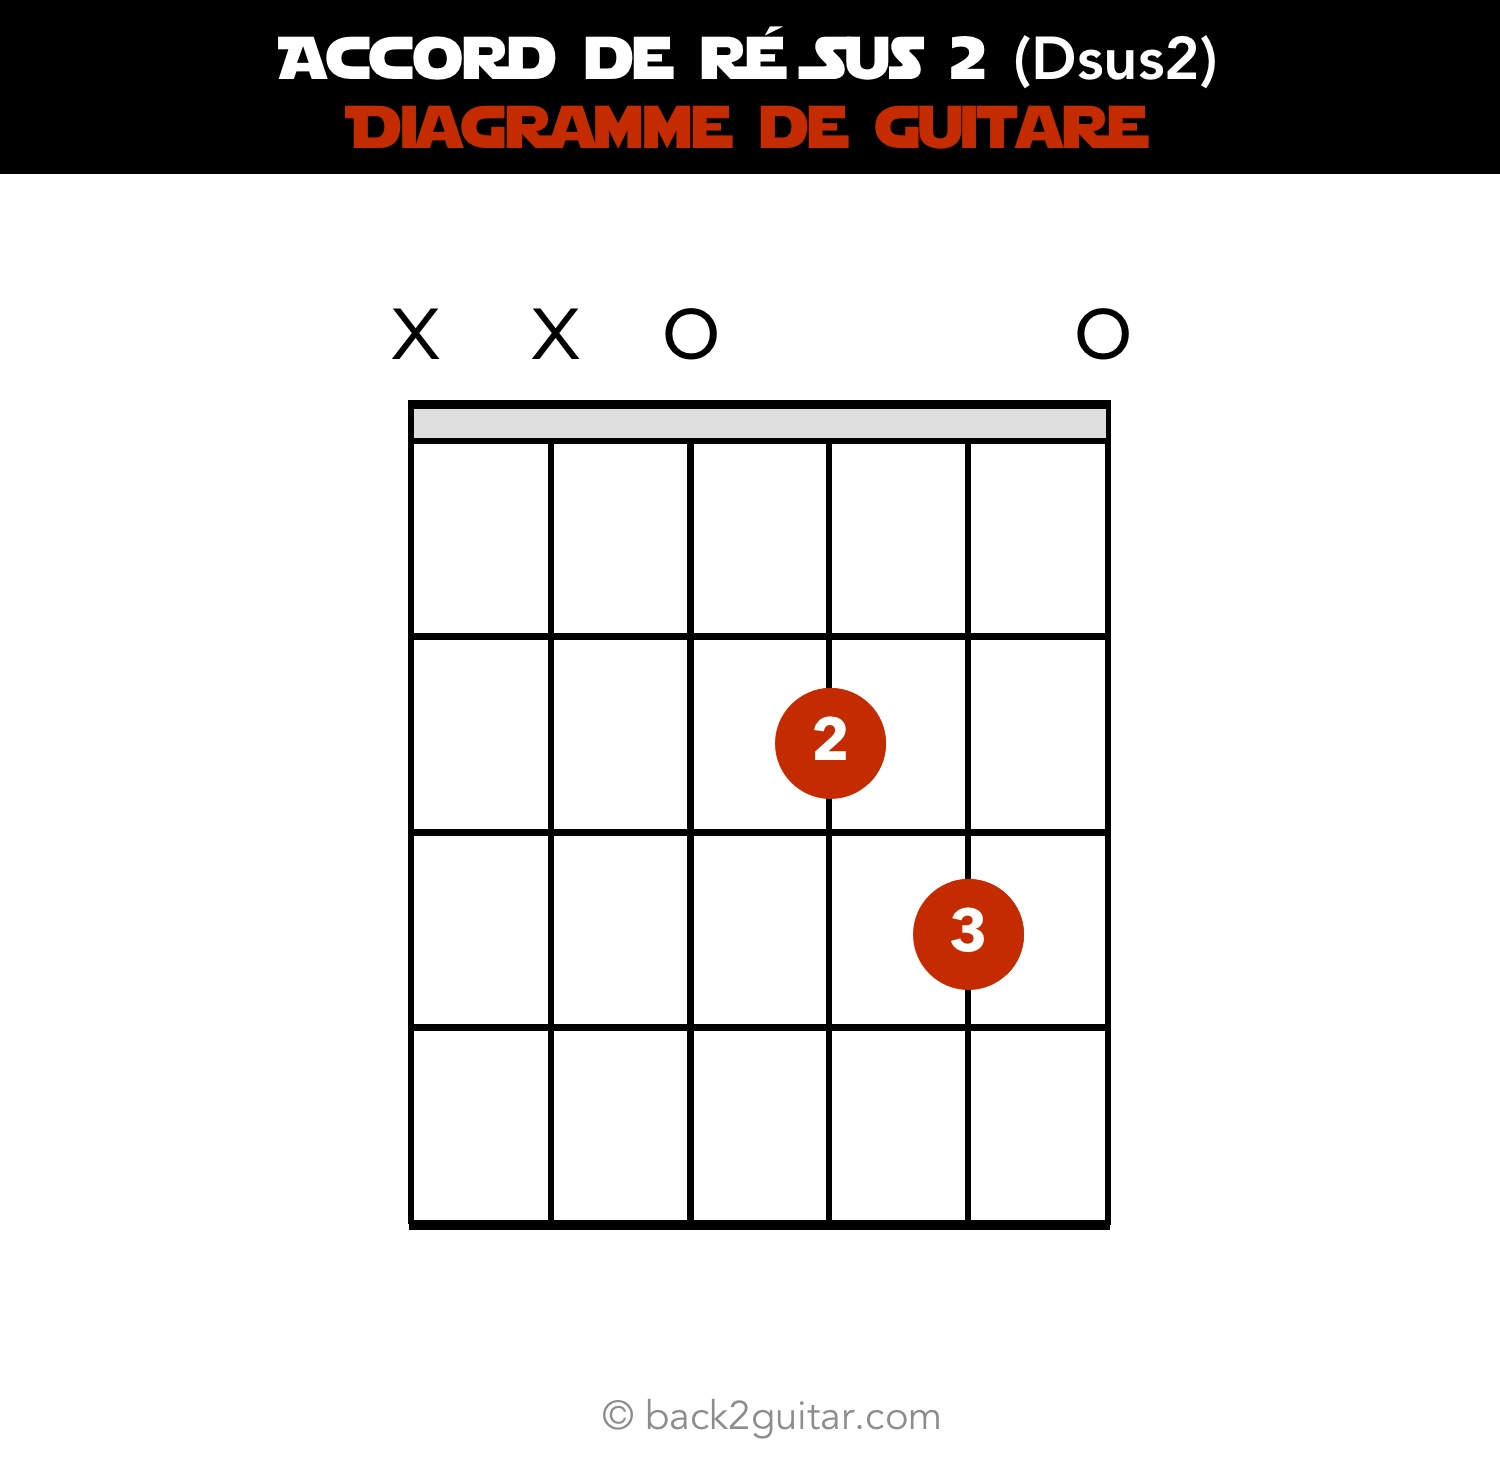 accord guitare ré sus2 diagramme guitare (Dsus2)